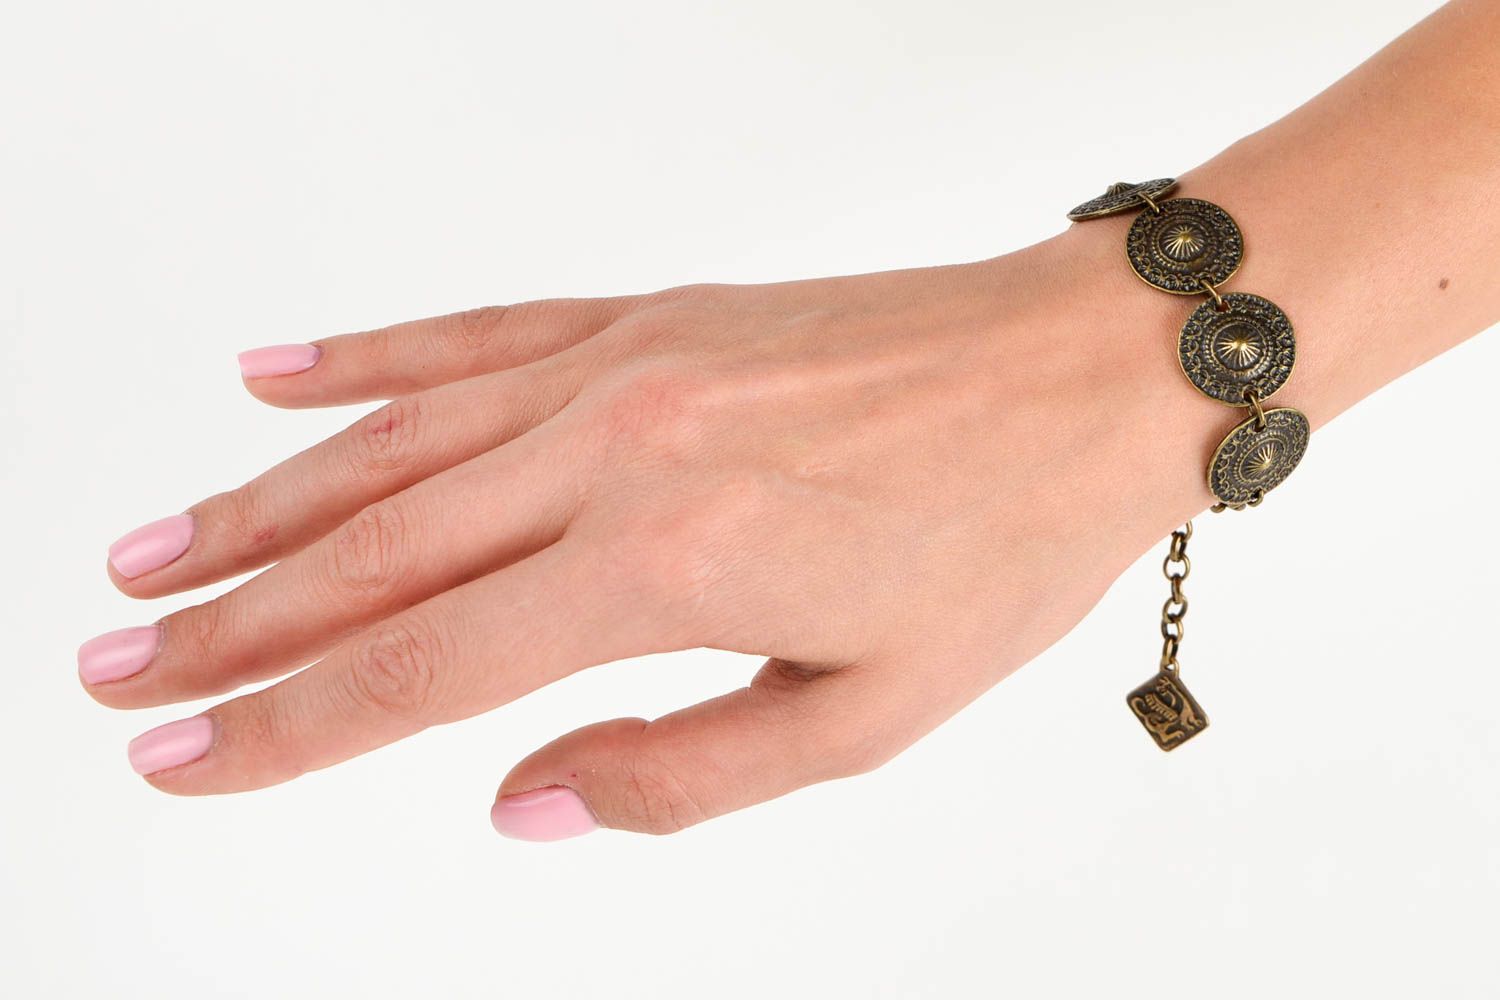 Elite handmade metal bracelet artisan jewelry designs accessories for girls photo 2